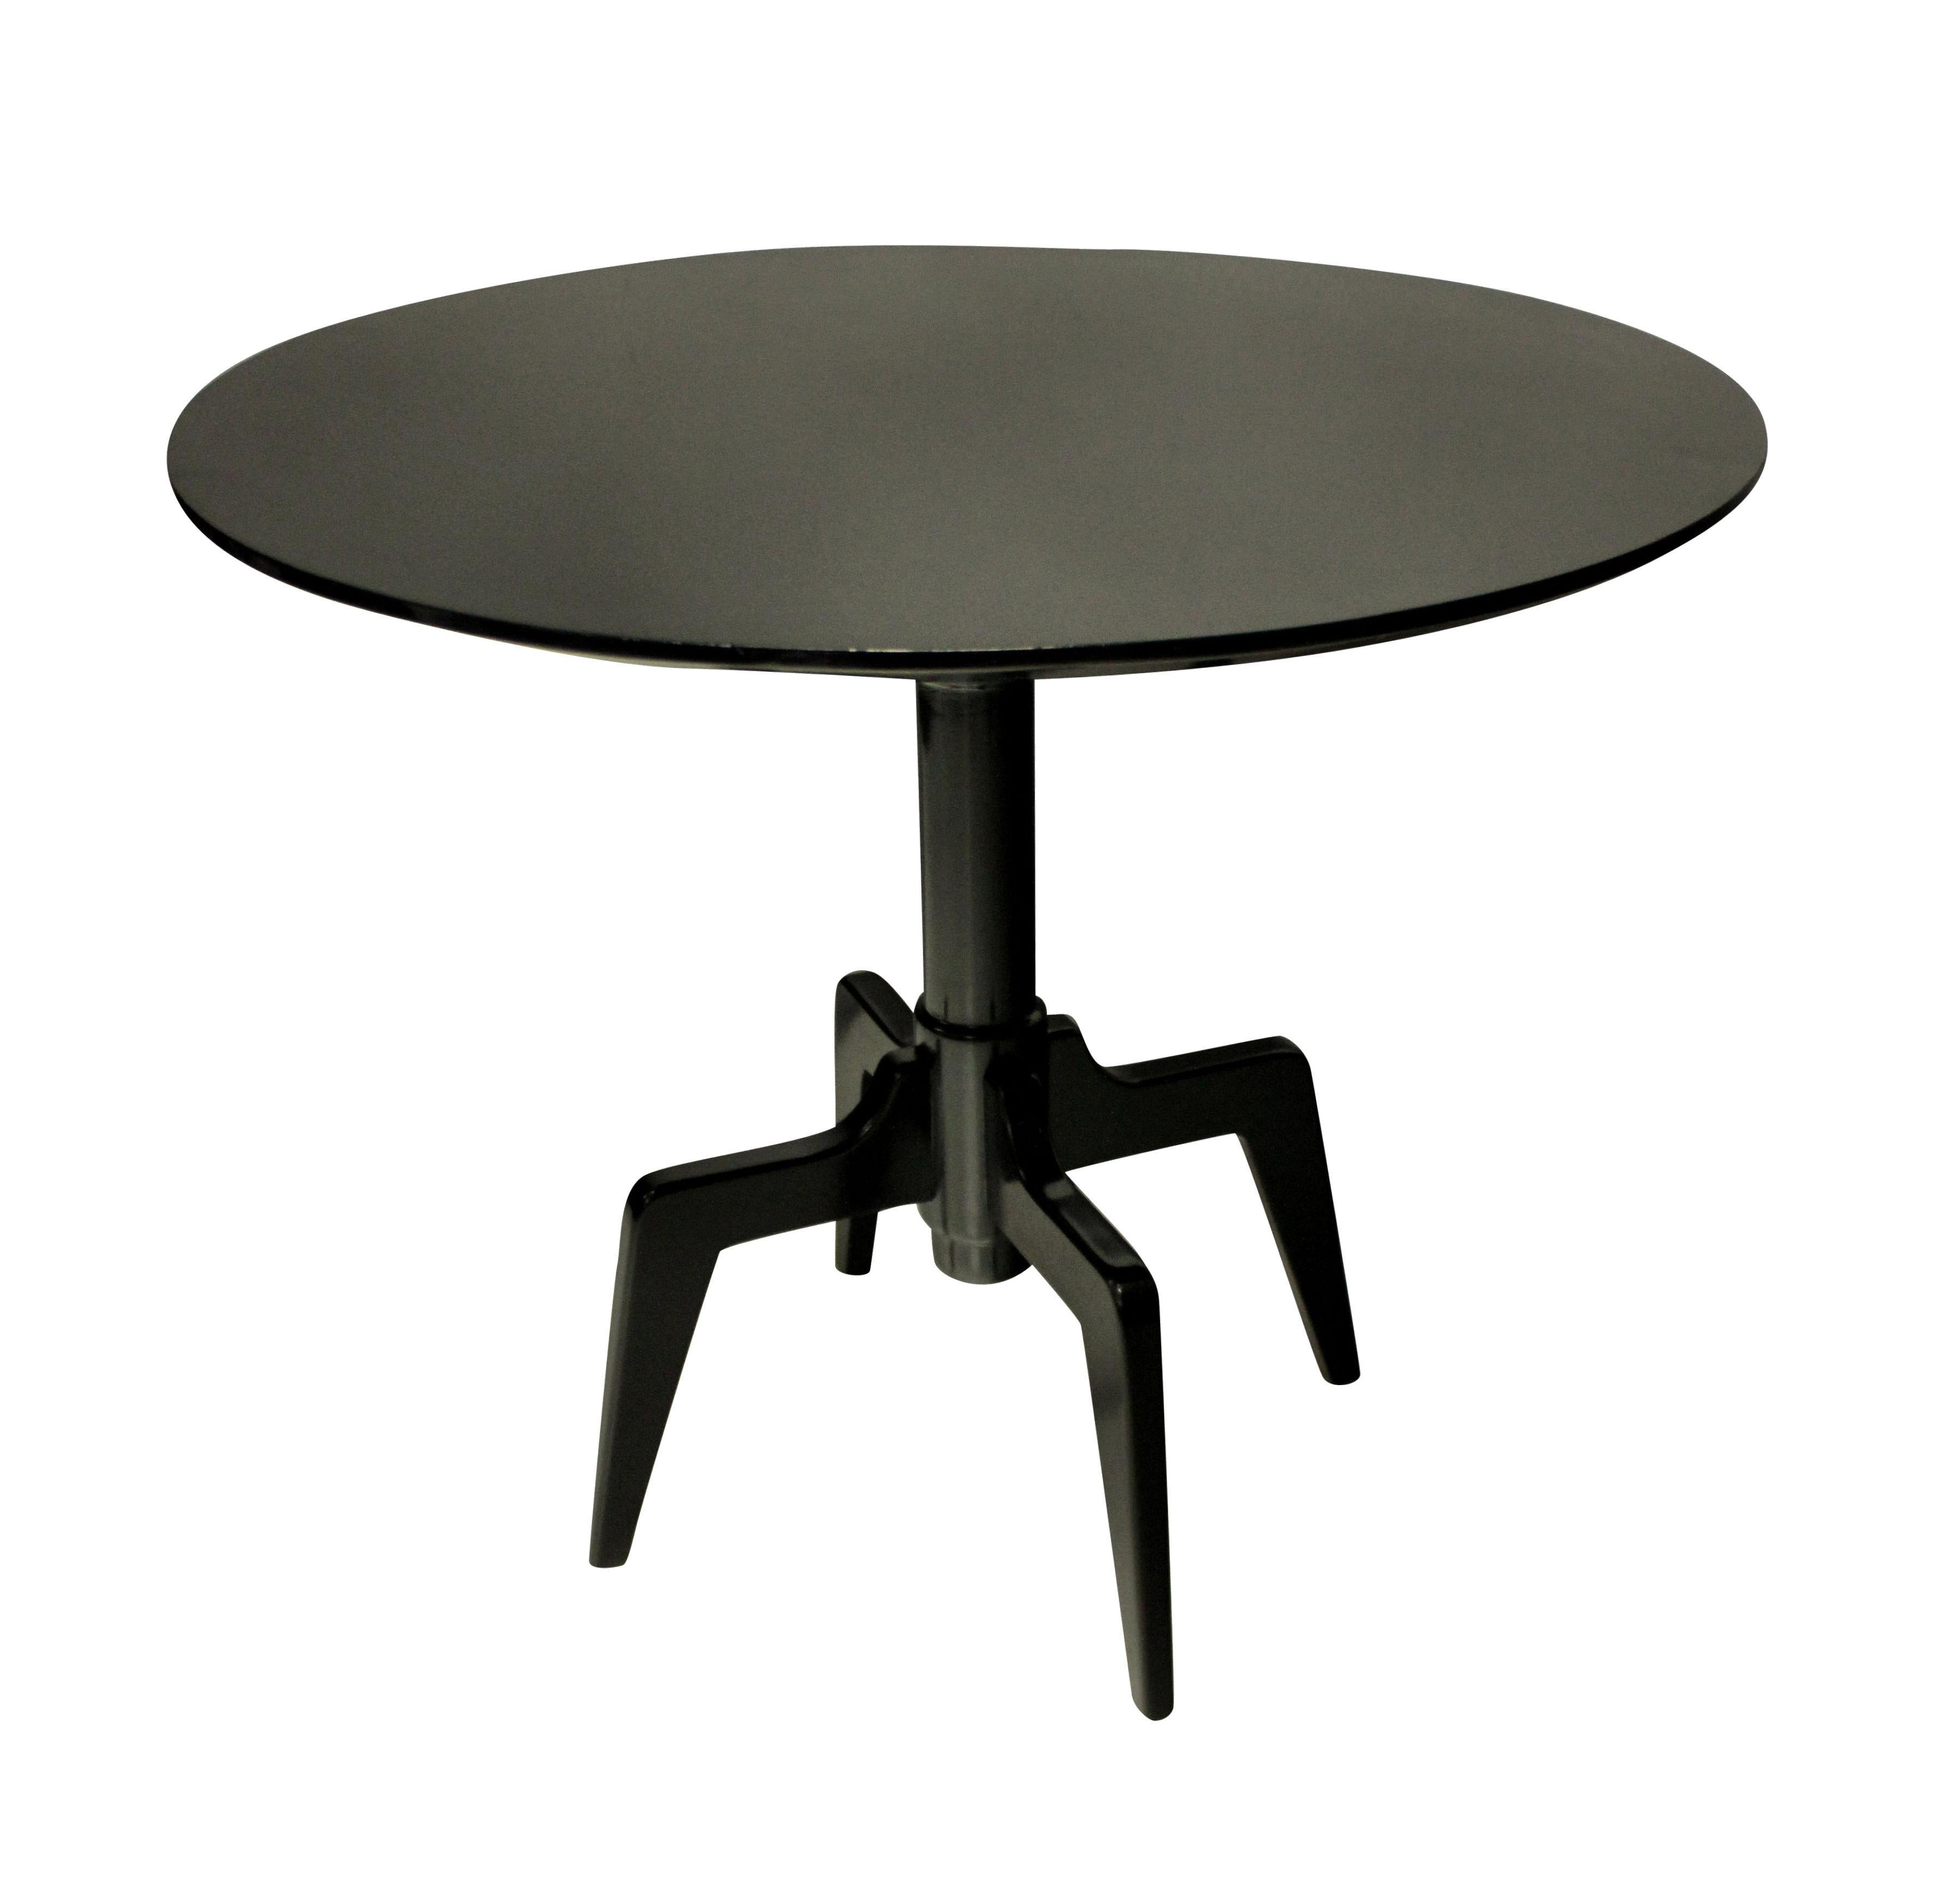 An unusual Italian mid-century, ebonized cherrywood centre table on raised articulated legs.